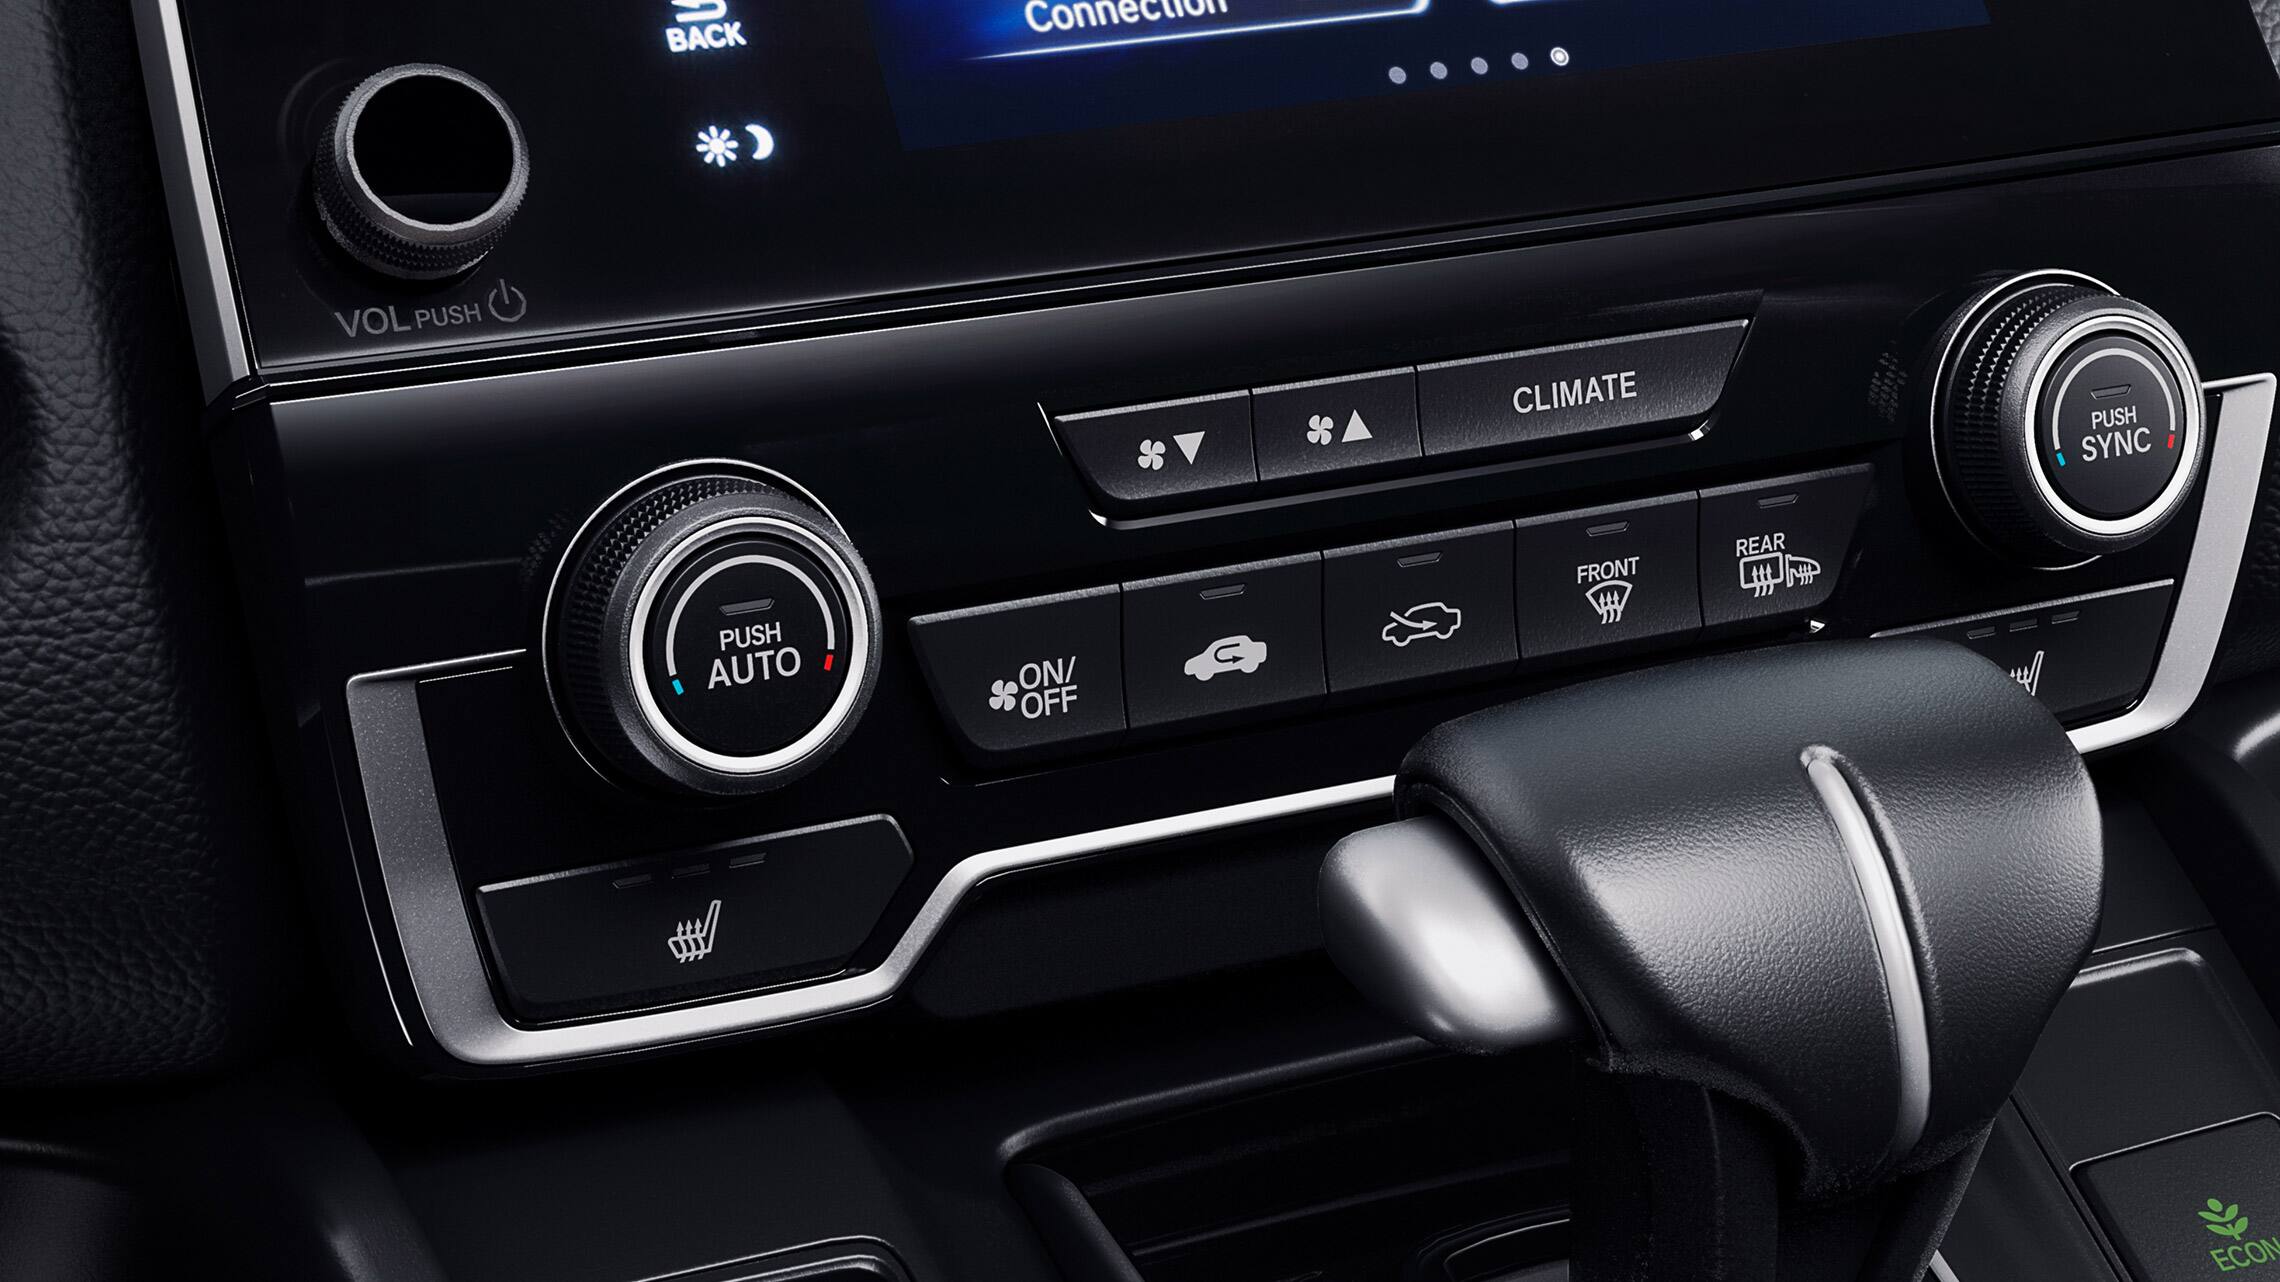 2019 Honda CR-V interior with dual-zone automatic climate control.